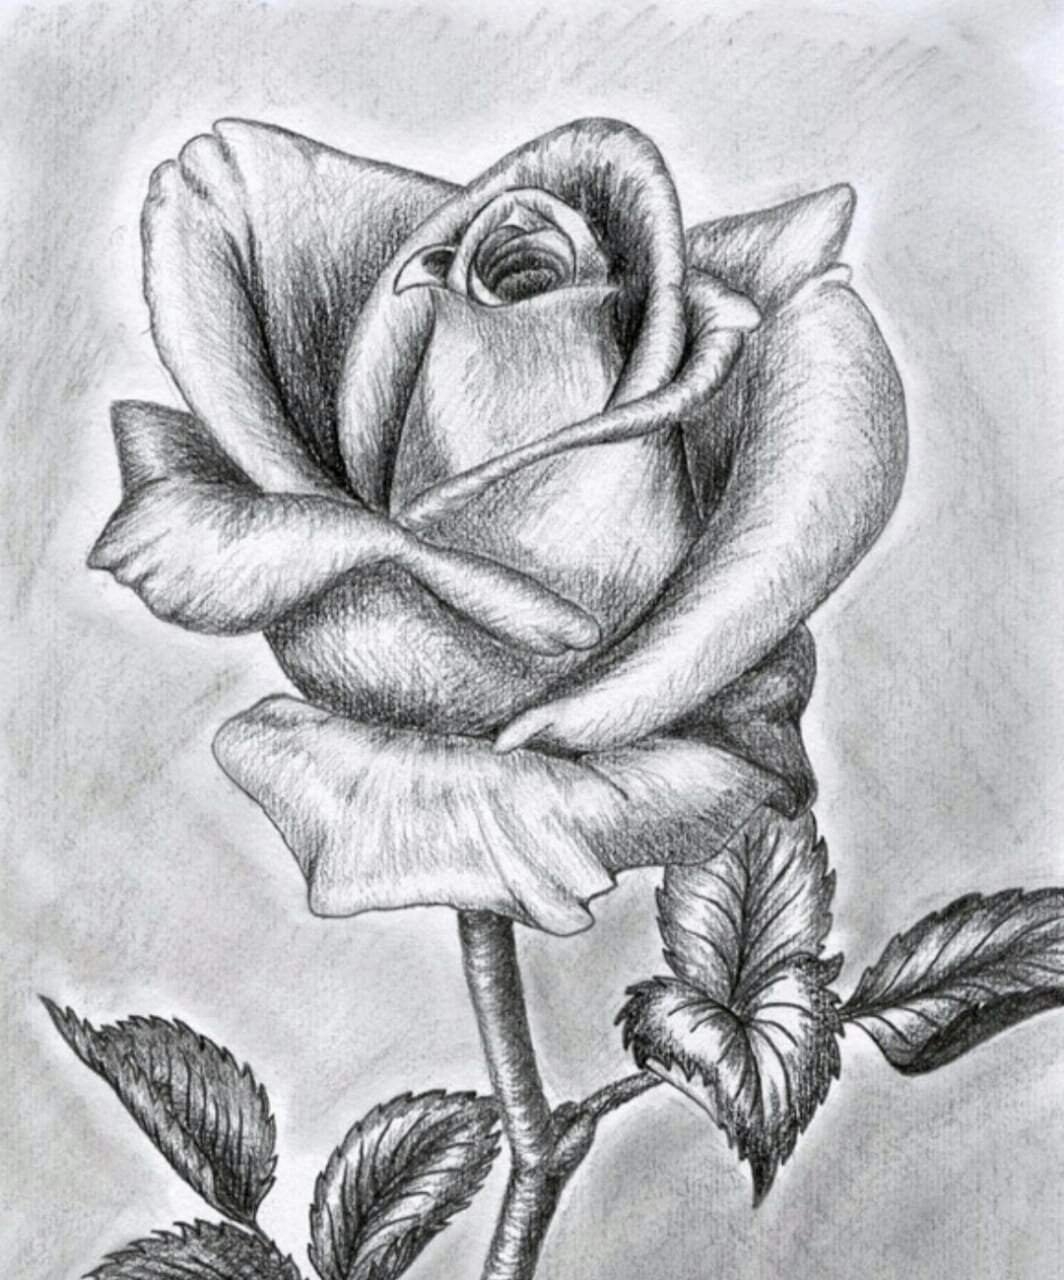 Chizish uchun rasmlar. Цветы карандашом. Красивые рисунки карандашом. Рози простым карандашом.